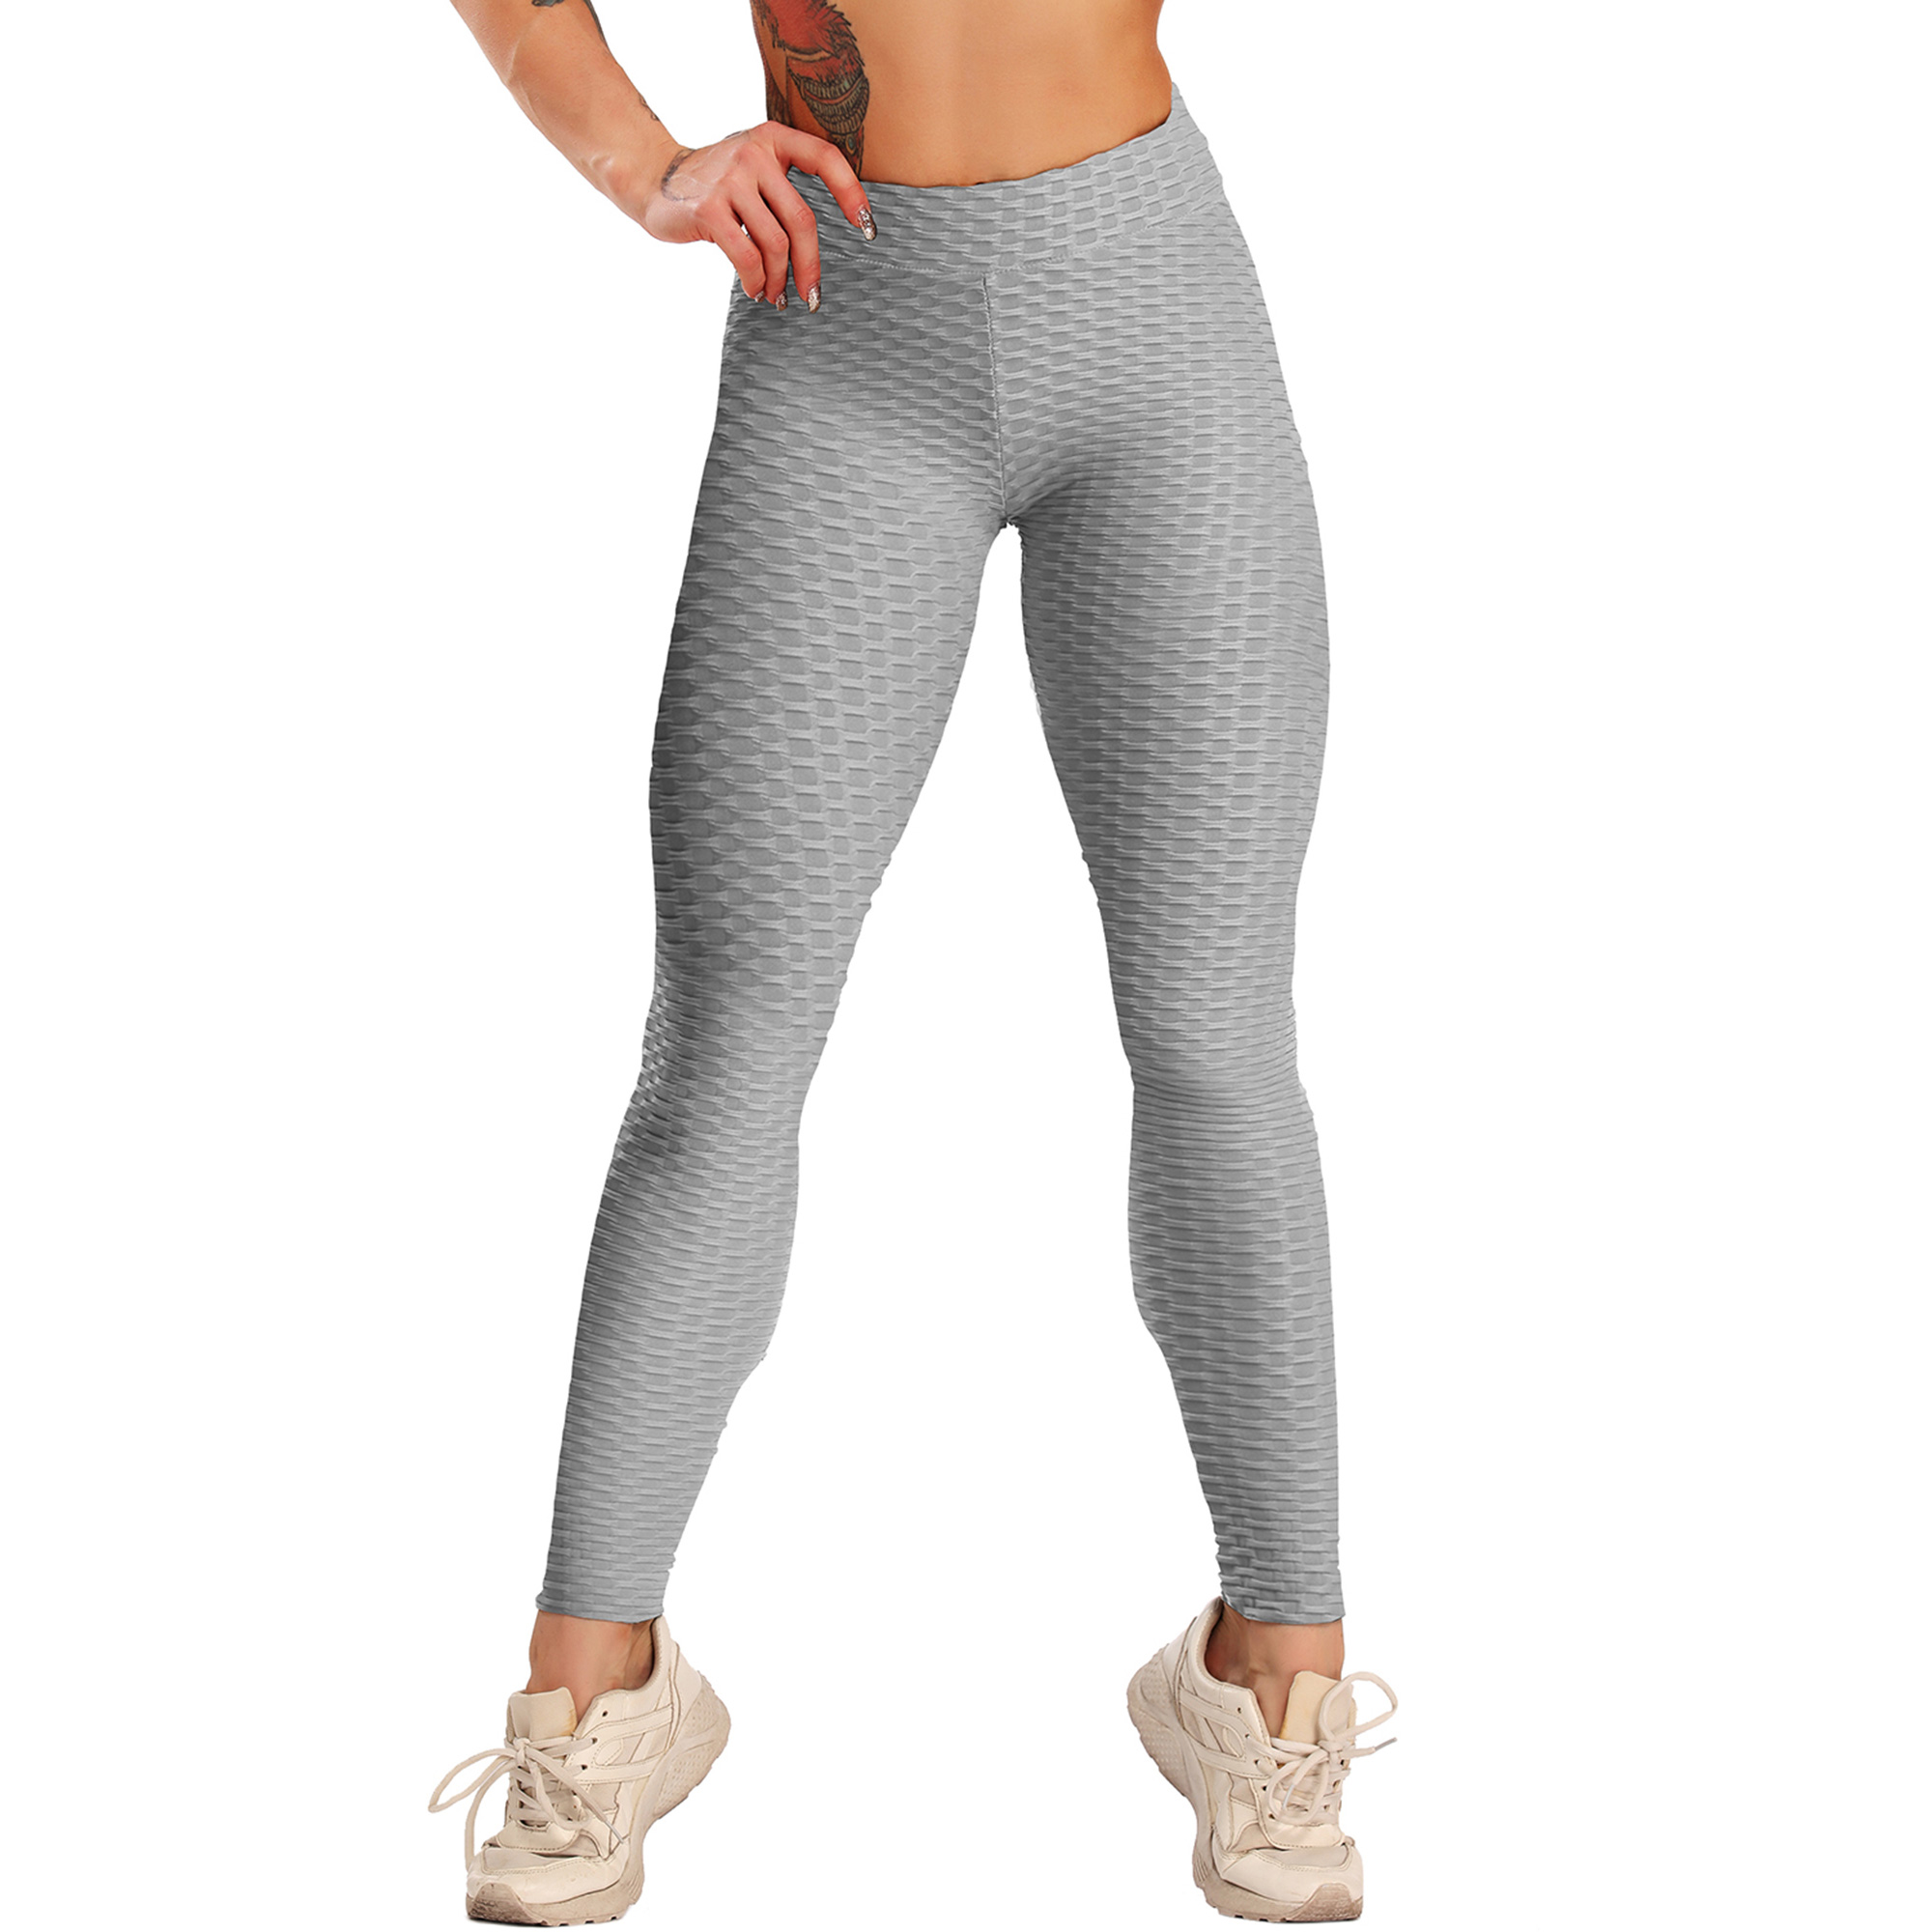 https://www.beyondhealthy.ca/wp-content/uploads/2020/08/grey-anti-cellulite-leggings.jpg